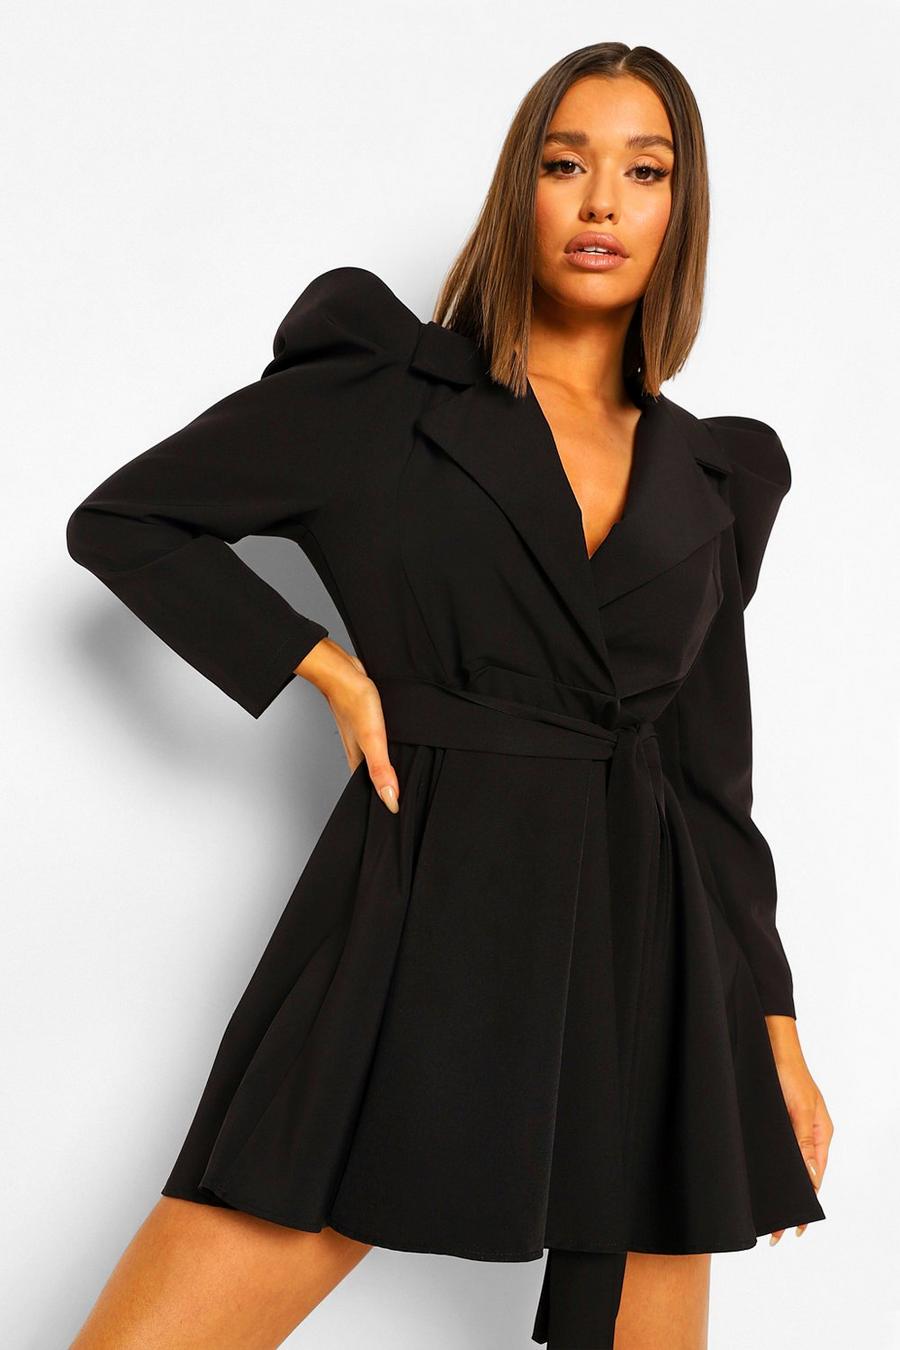 Black Ruched Sleeve Tailored Blazer Dress image number 1